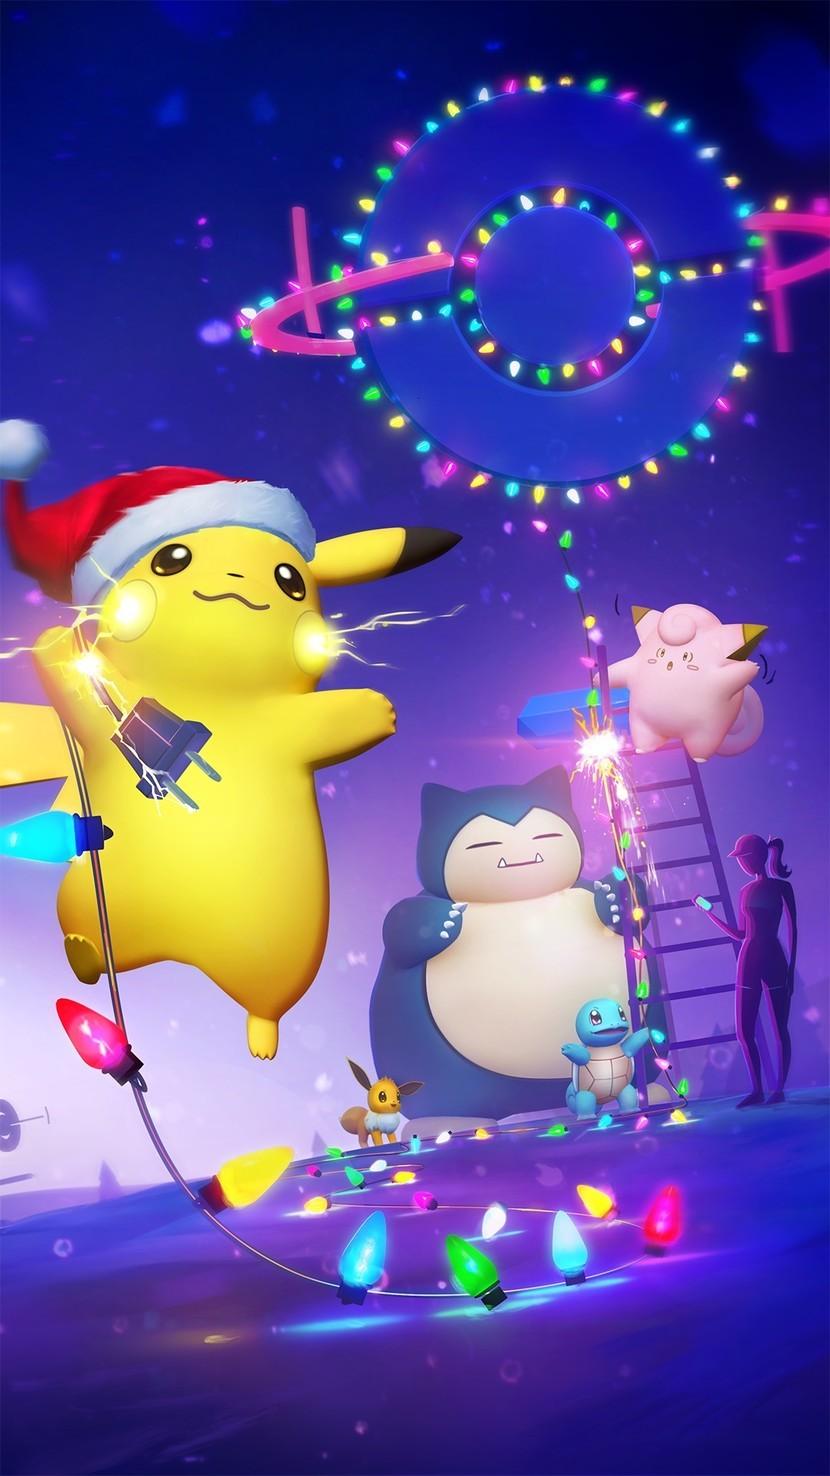 Official Pokémon Go wallpaper for 2019